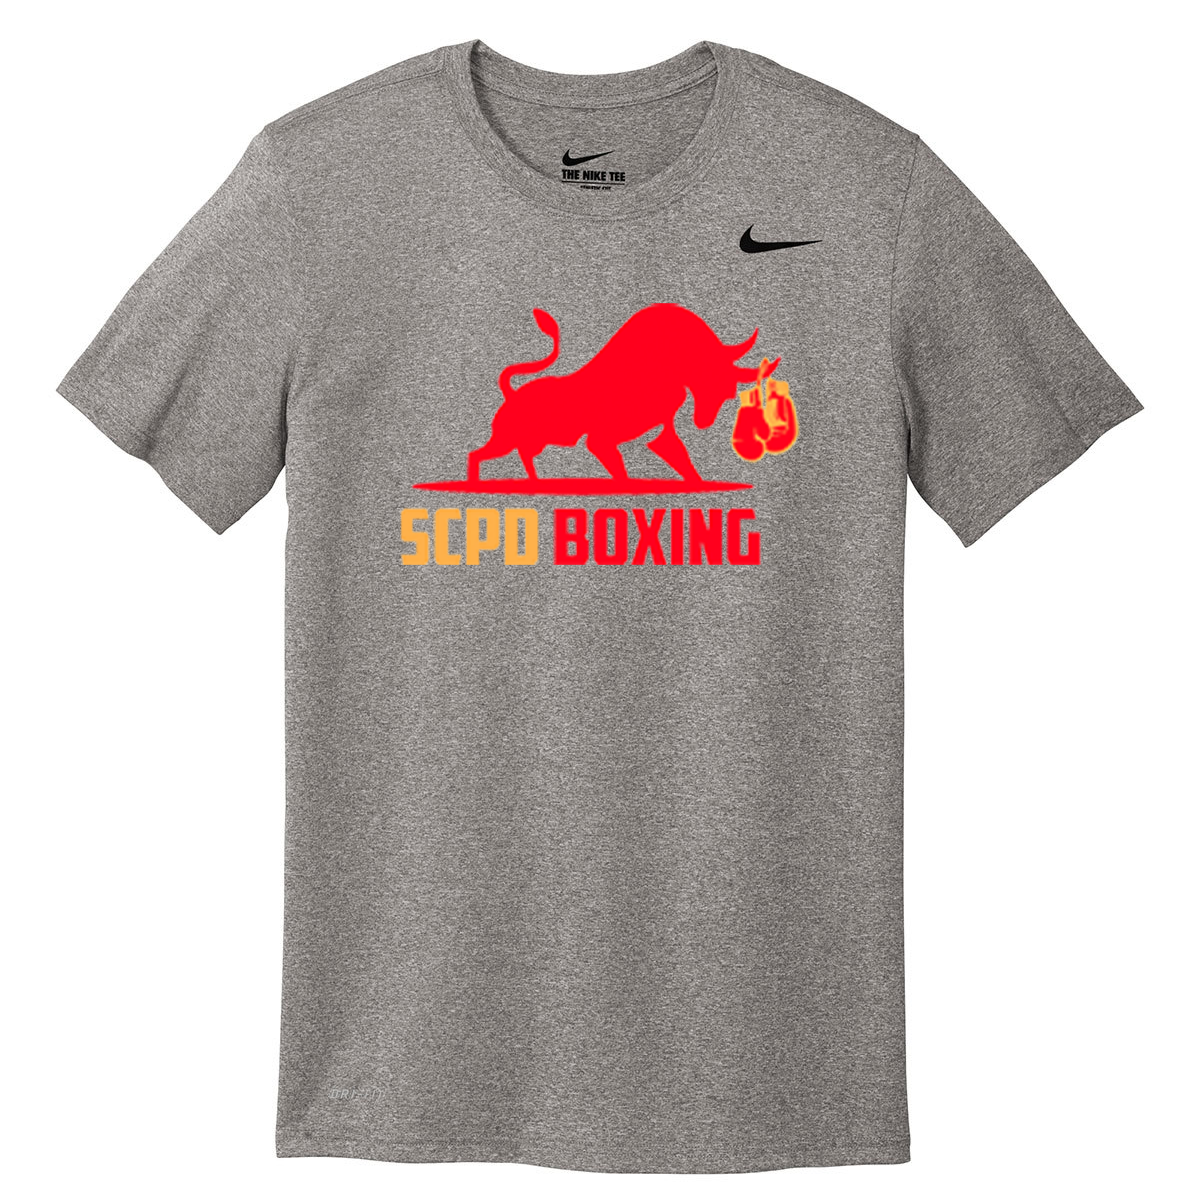 SCPD Boxing Nike rLegend Tee